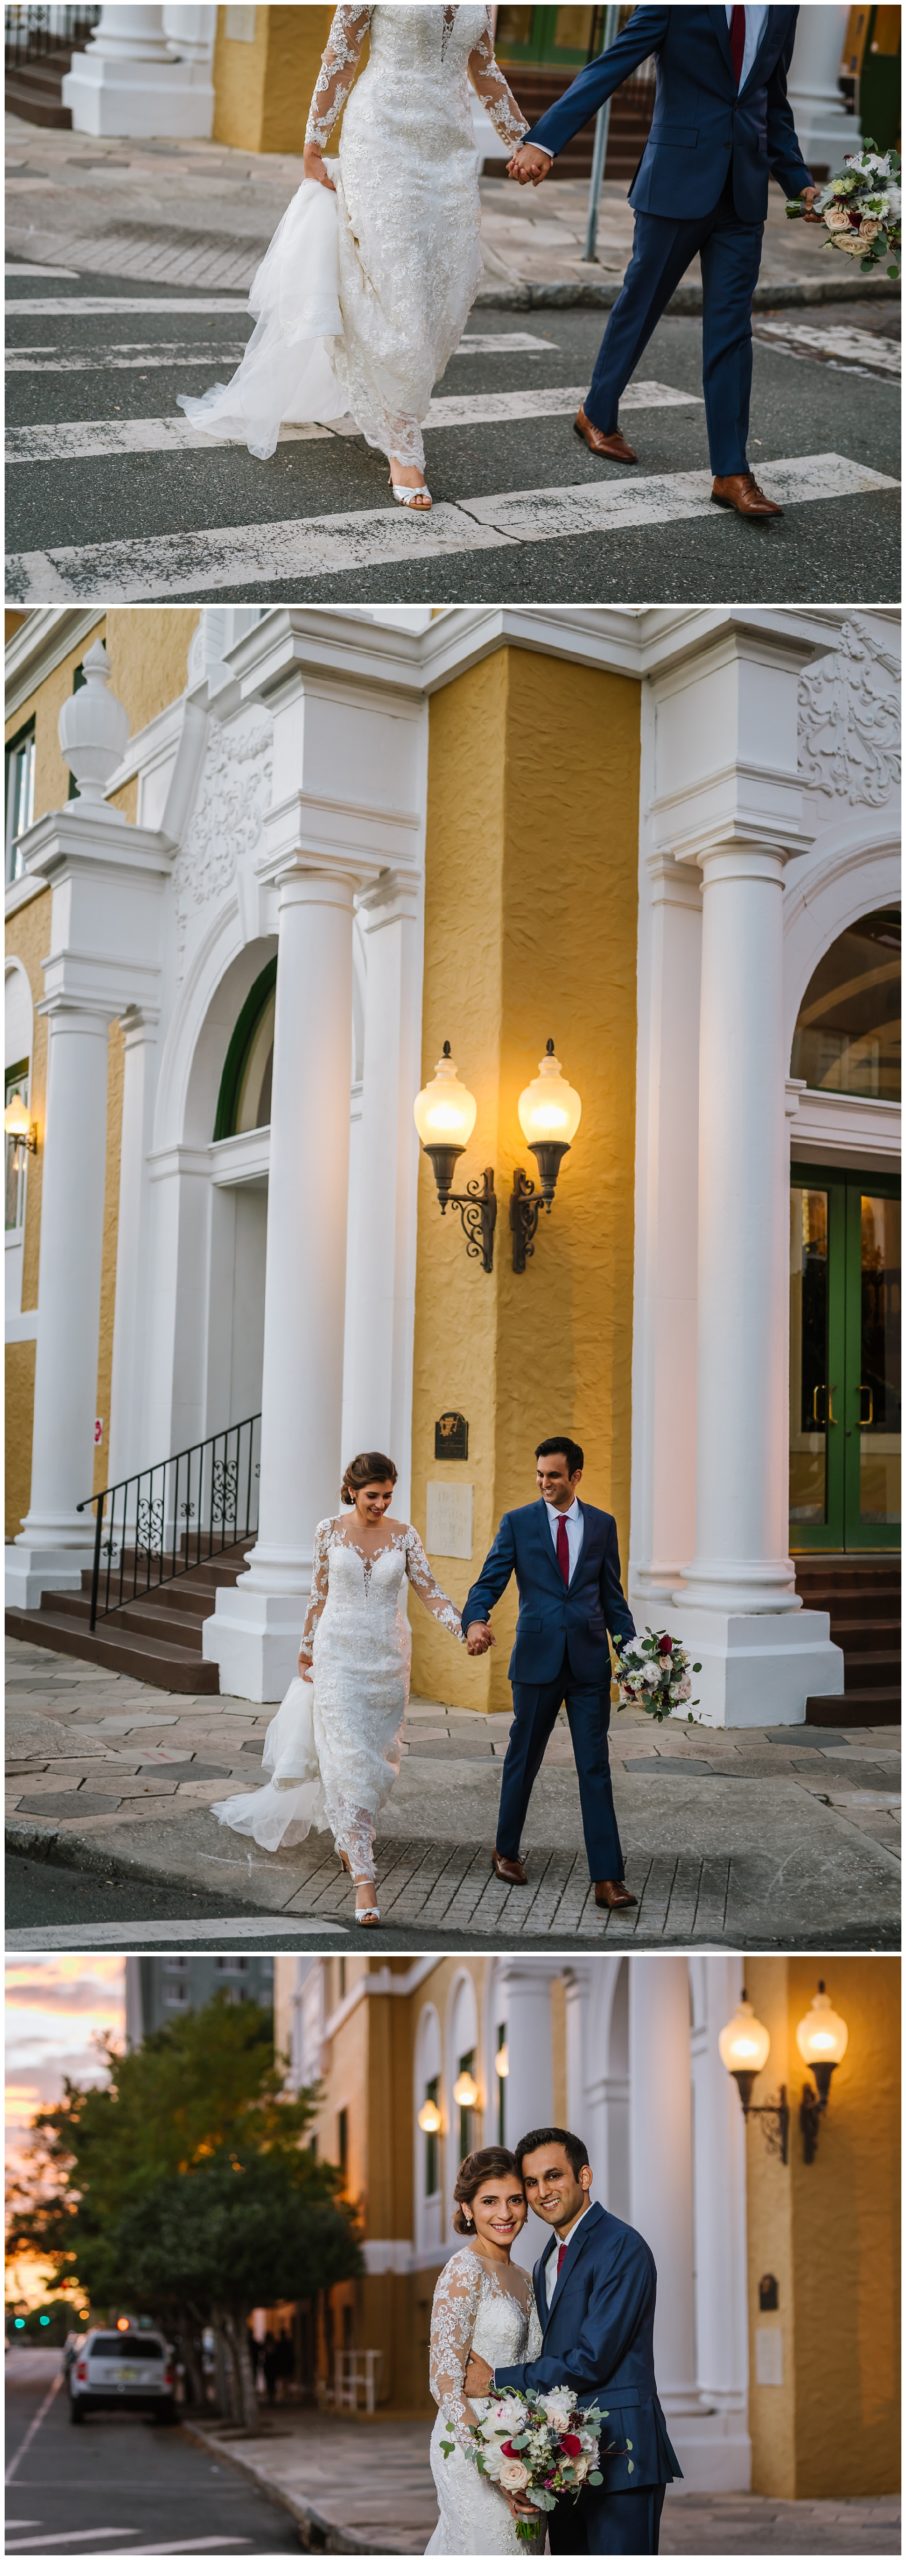 Tampa-multicultural-wedding-photographer-indian-puerto-rican-mirror-lake-lyceum_0045.jpg